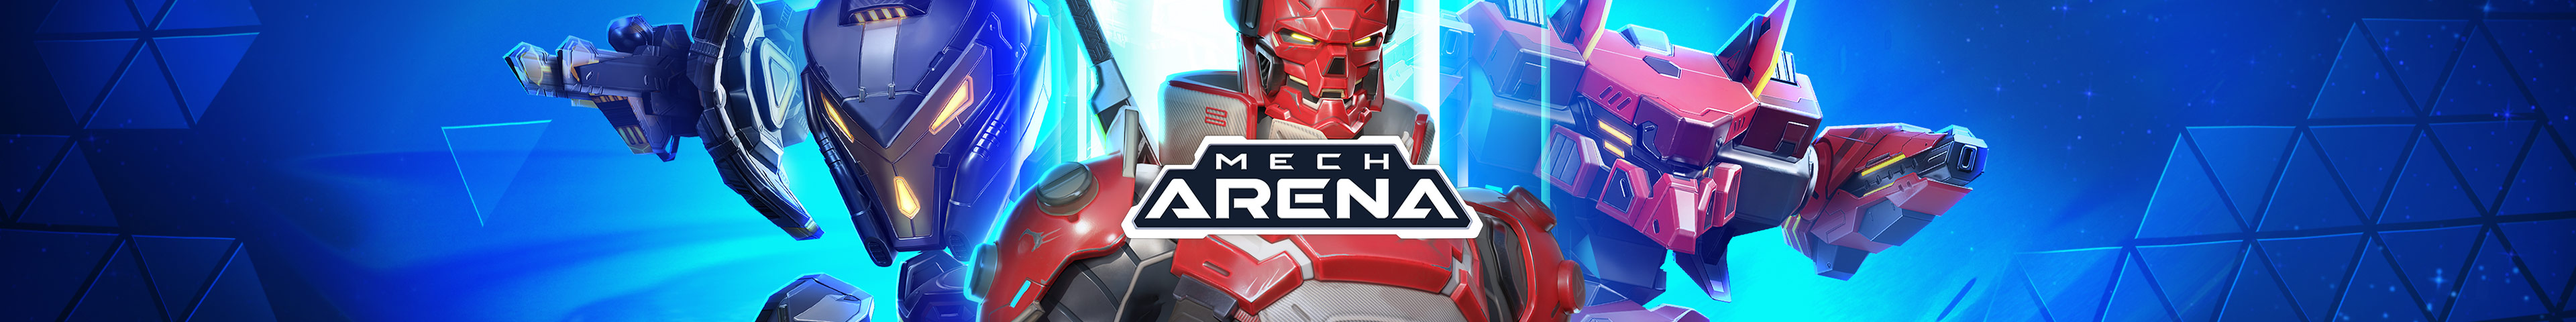 Mech Arena Anniversary on PC starts tomorrow!